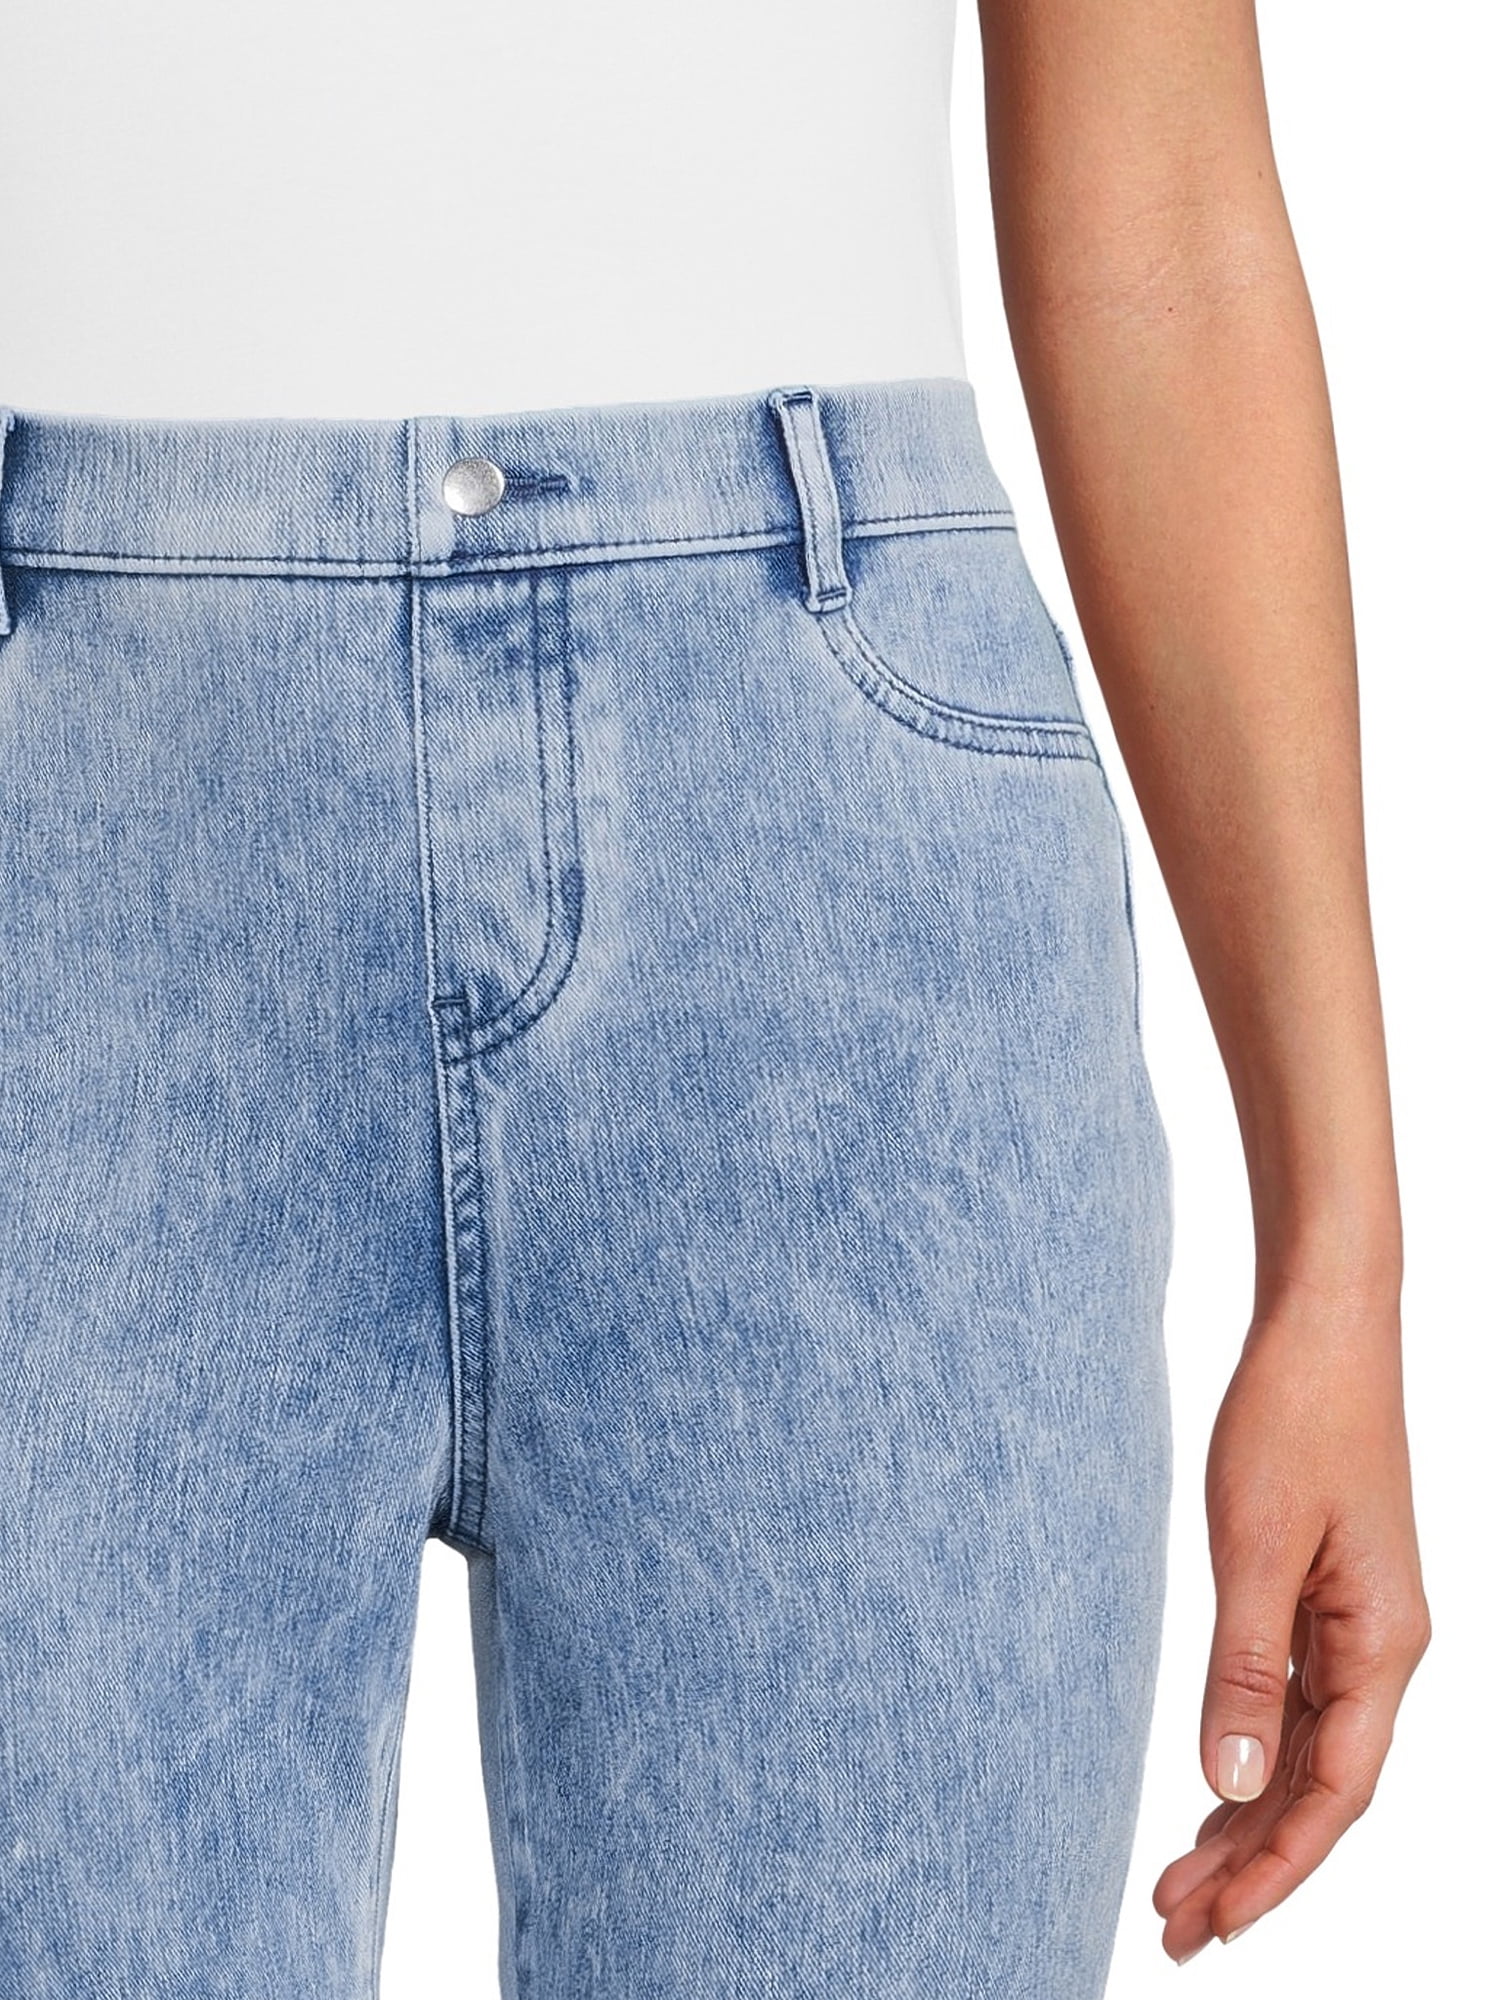 TIME AND TRU Jeans Womens 14 Blue High Rise Jegging Mid Wash Stretch Denim  30x29 $15.99 - PicClick